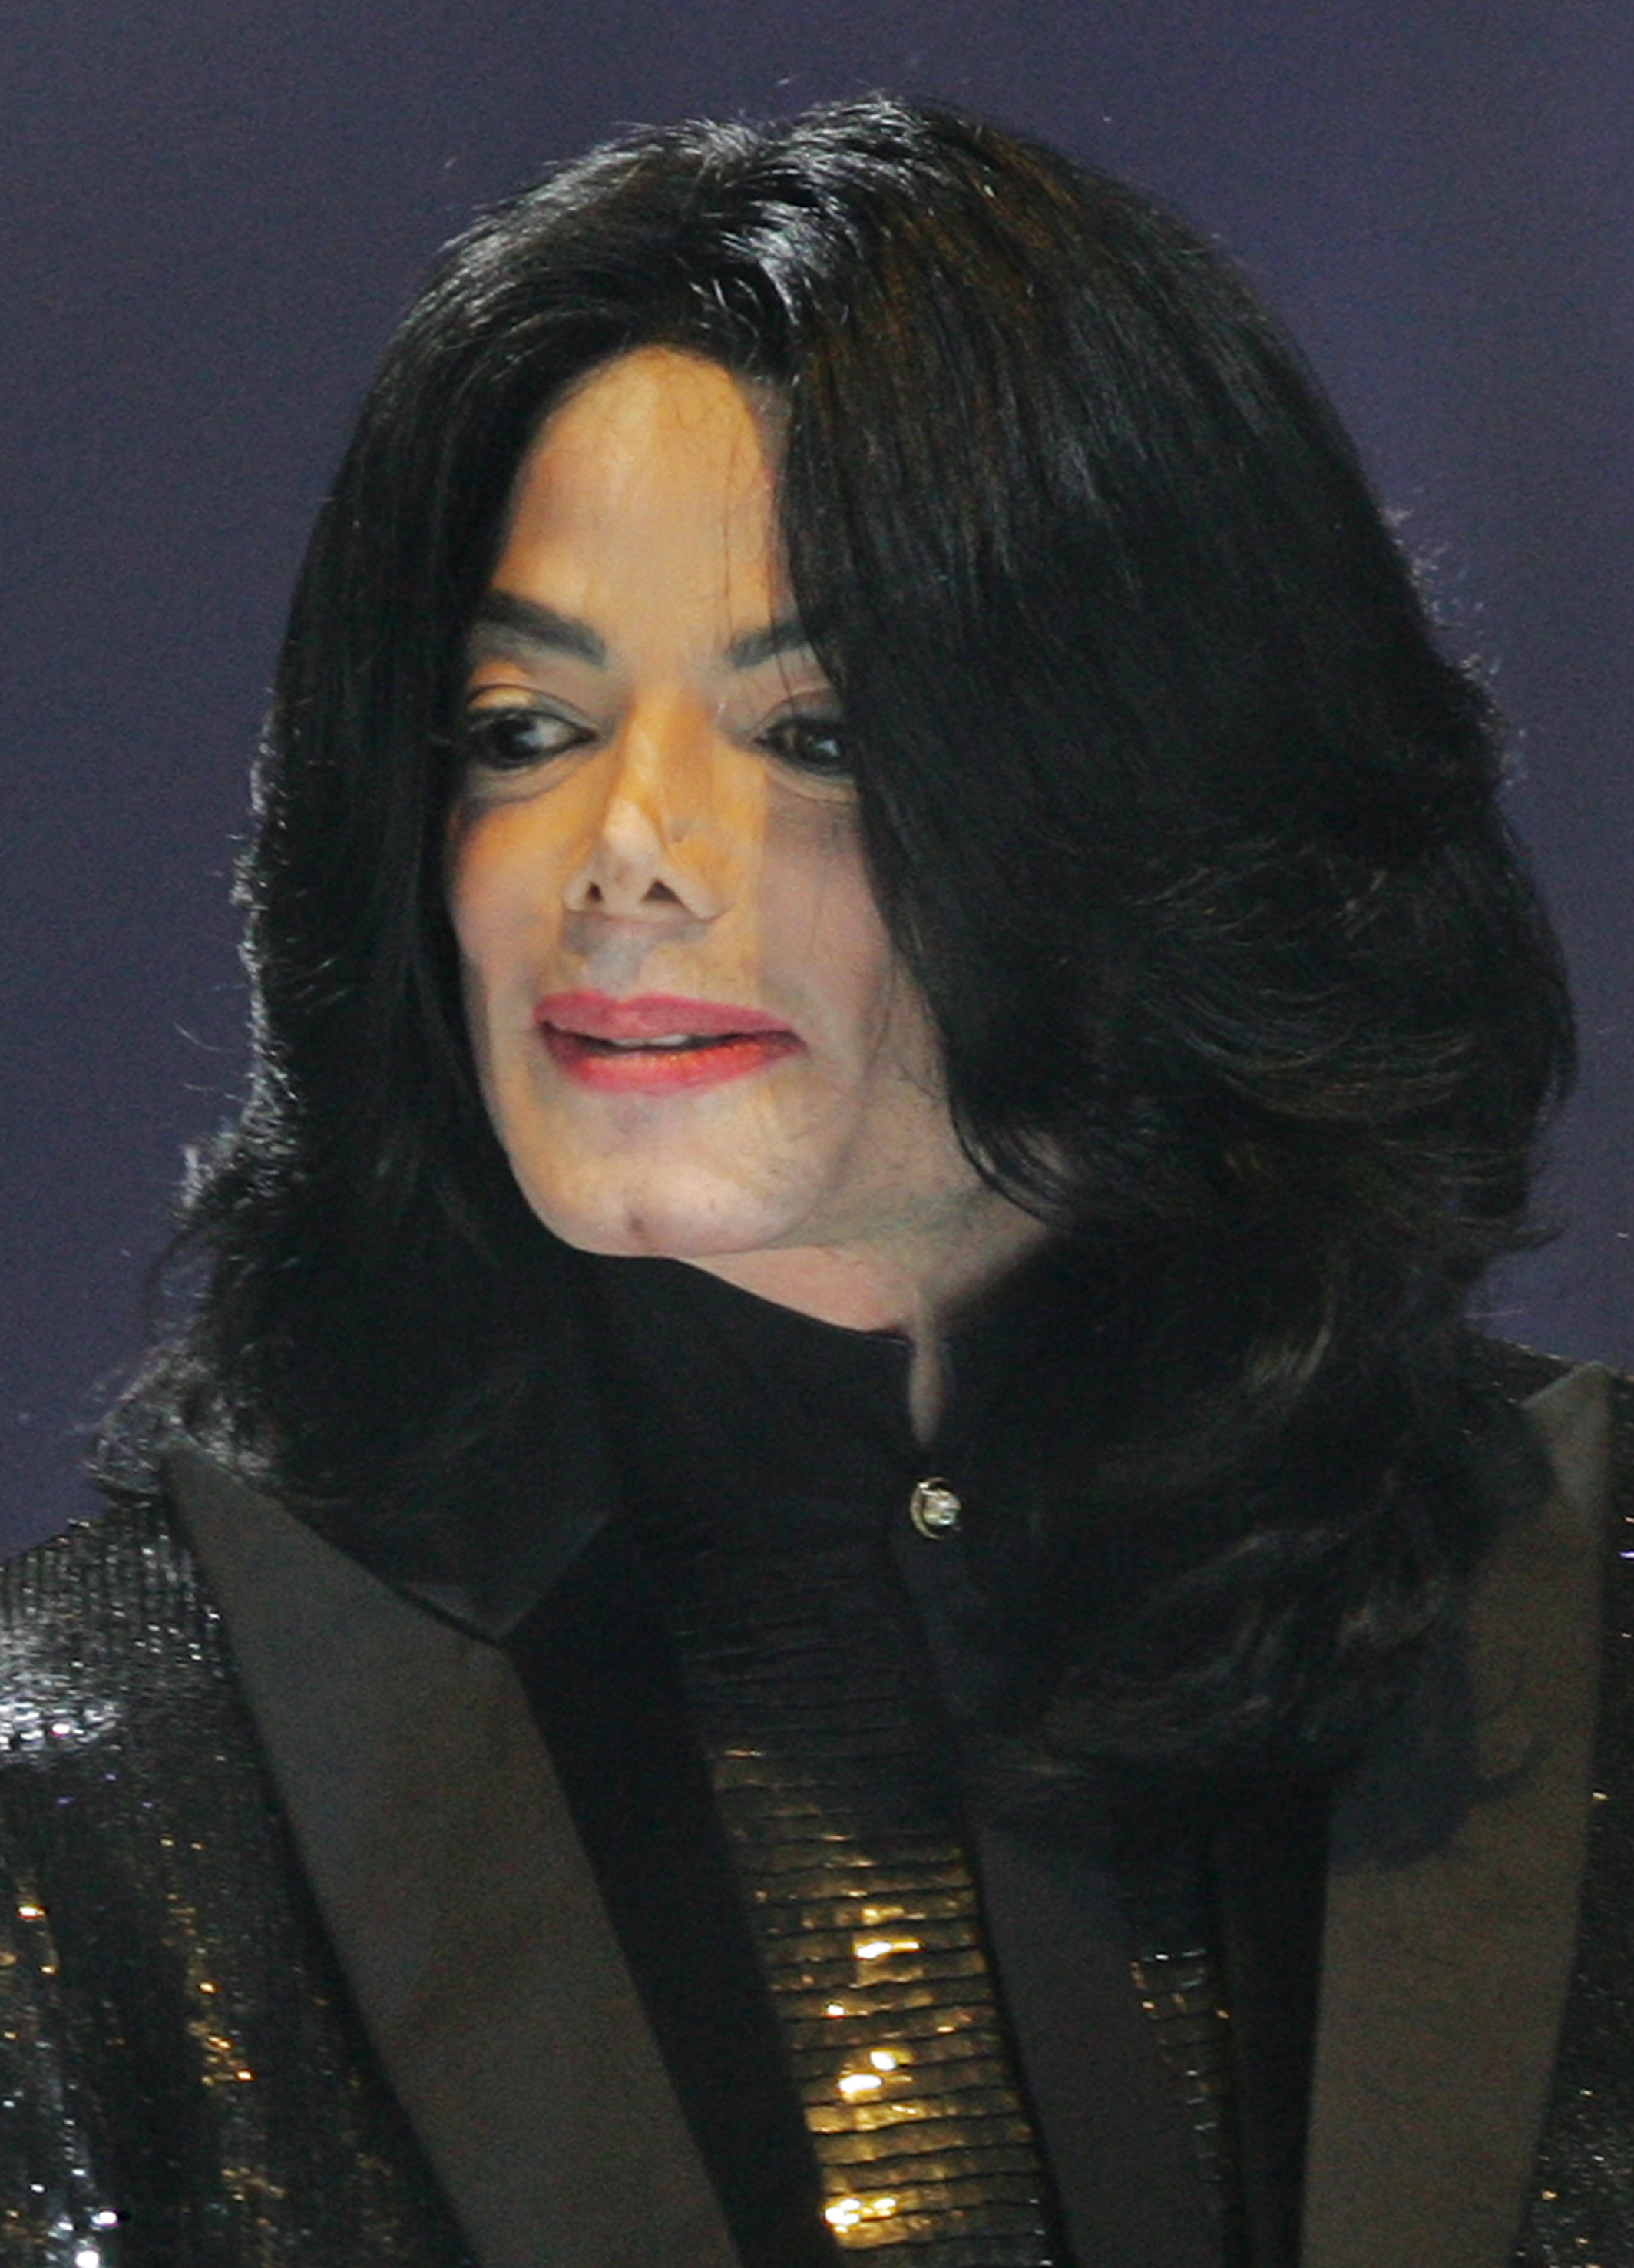 Michael Jackson im Jahr 2006 | Quelle: Getty Images